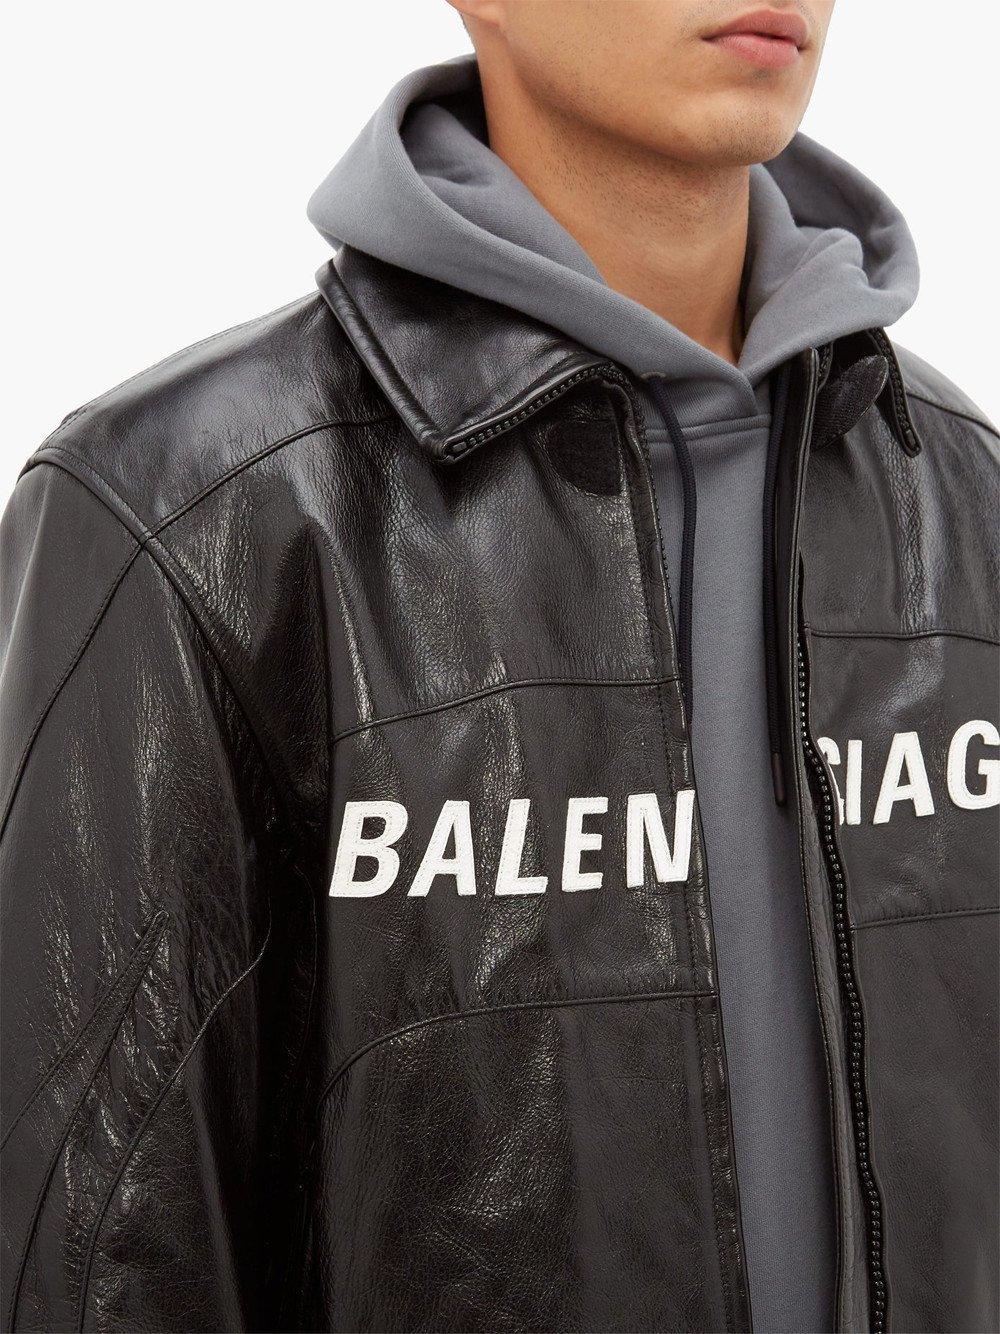 Balenciaga Oversized Logo Appliqué Leather Biker Jacket in Black for